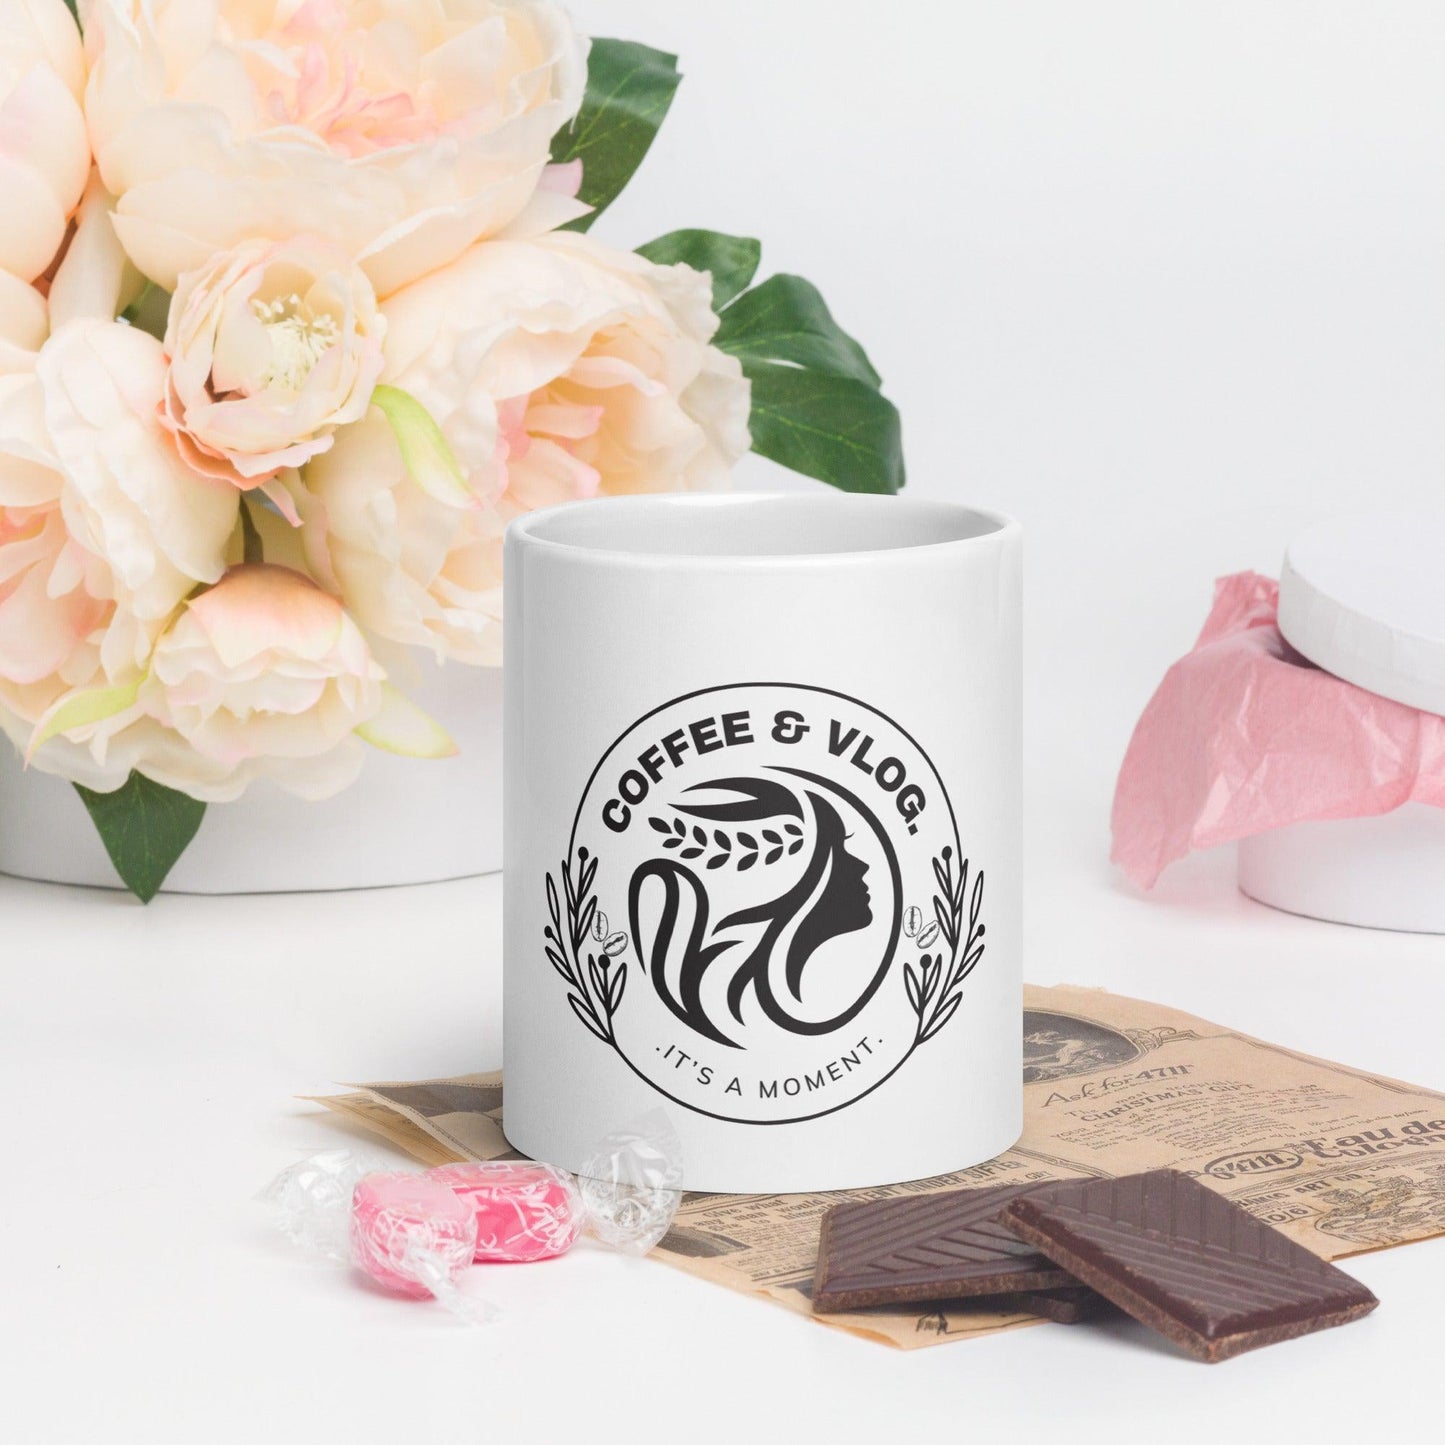 Minimalist White Coffee and Vlog Glossy Mug Gift - COFFEEBRE